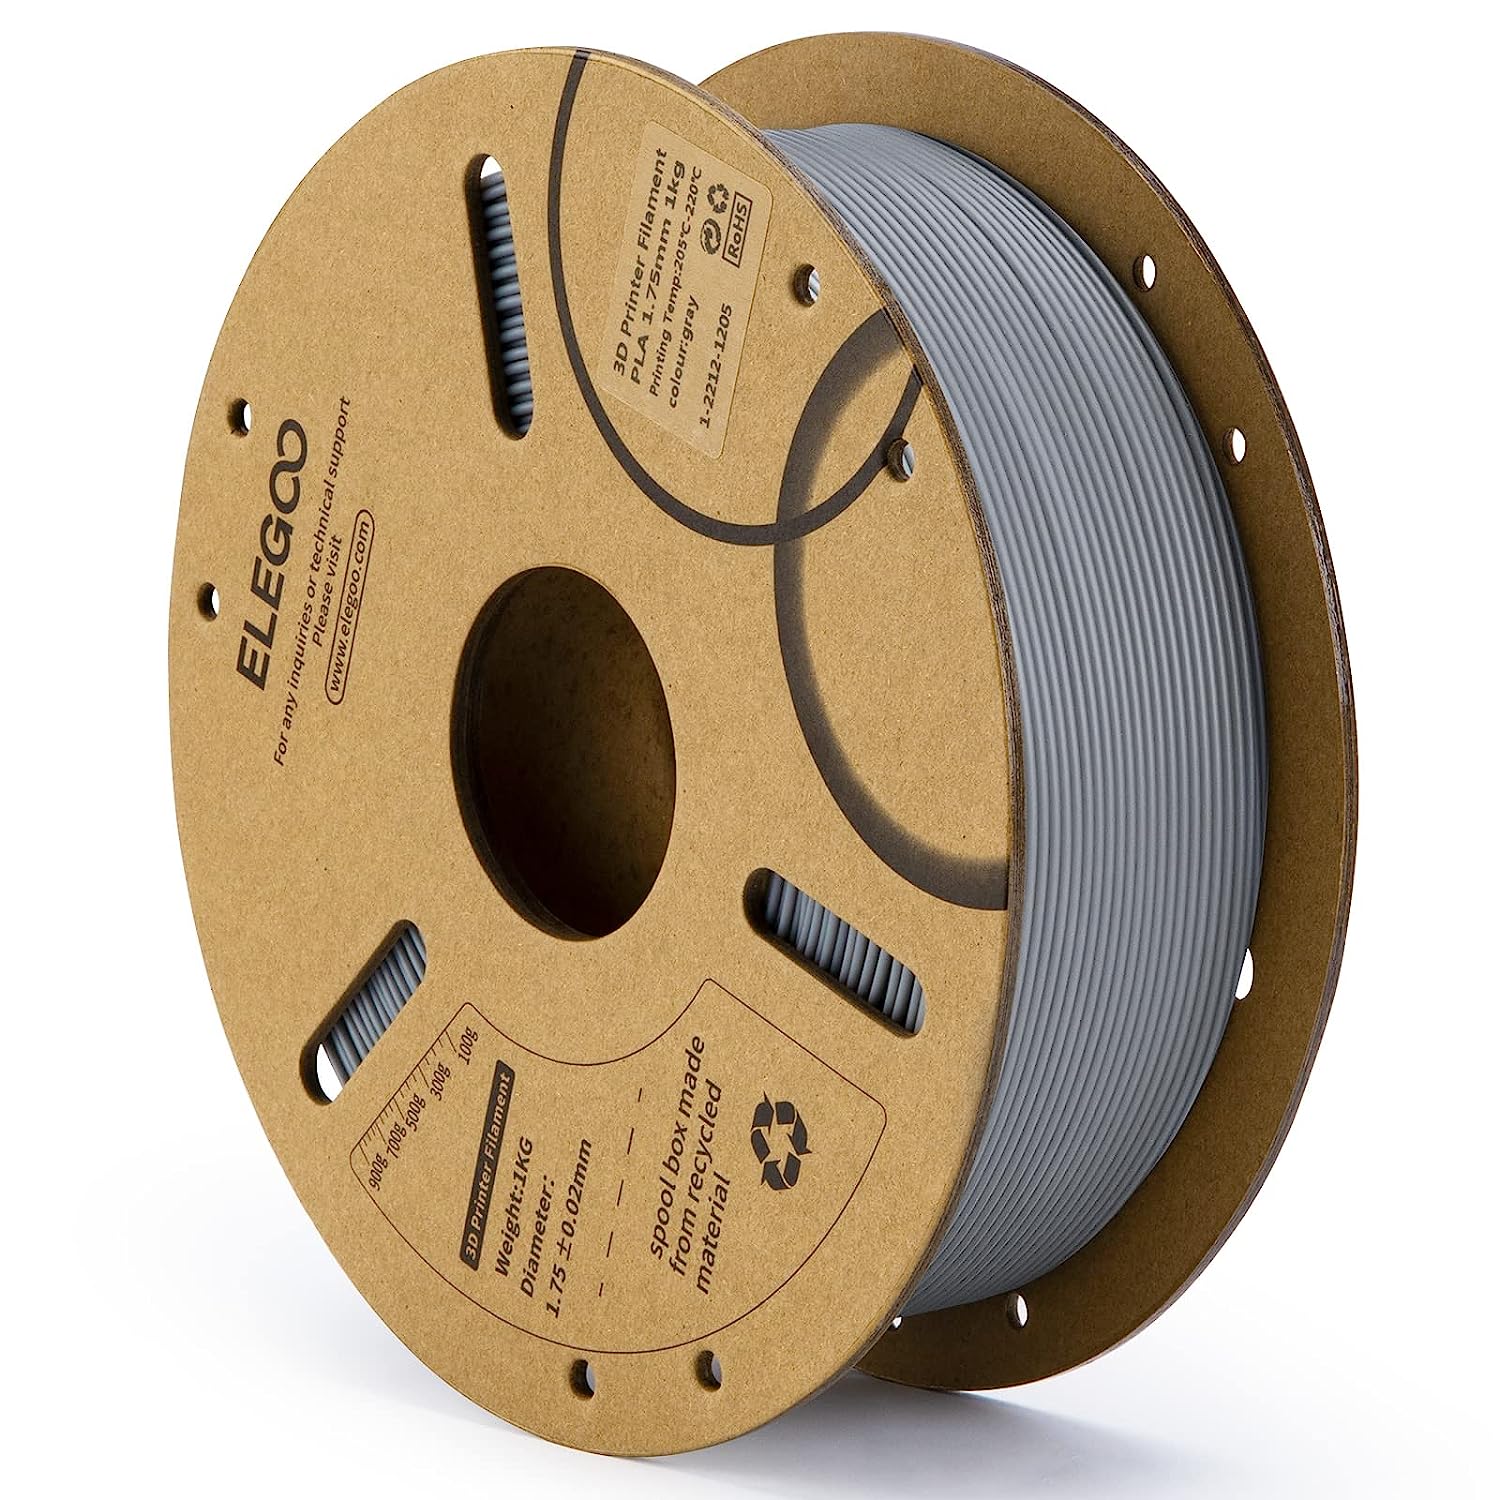 ELEGOO PLA Filament 1.75mm 3D Printer Filament 1Kg Cardboard Spool - Grey